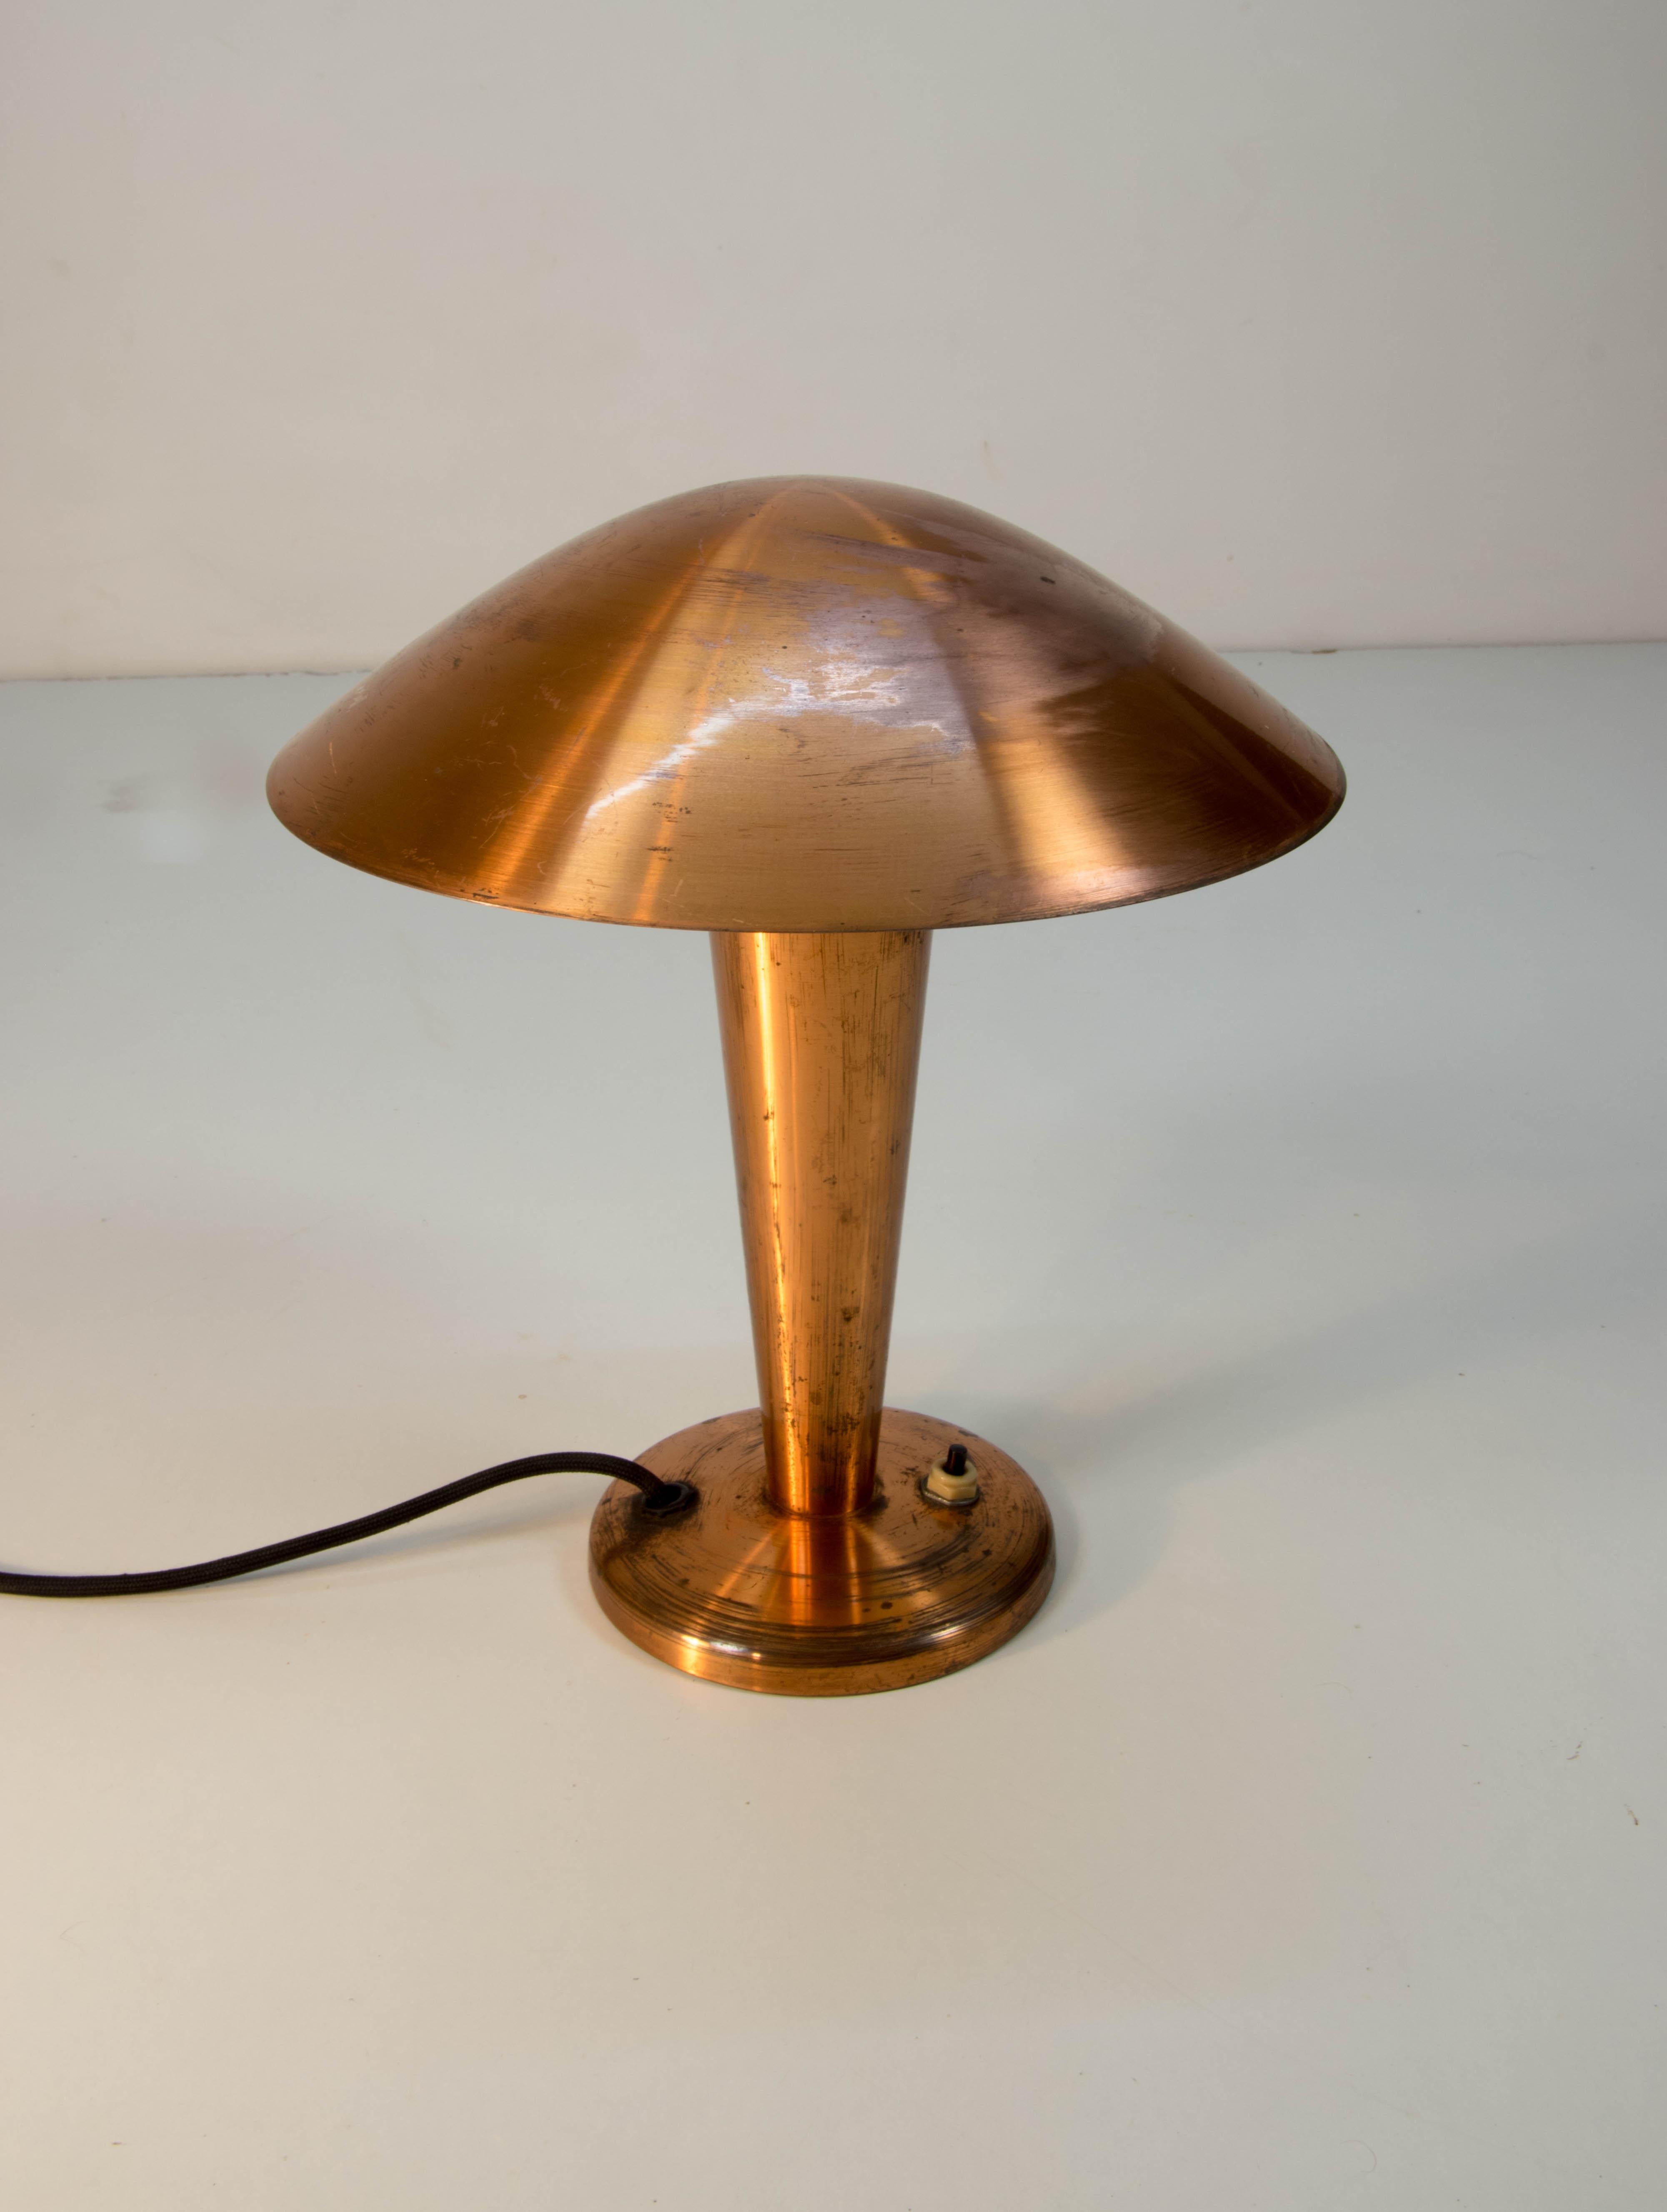 Czech Bauhaus Table Lamp with Flexible Shade, 1930s